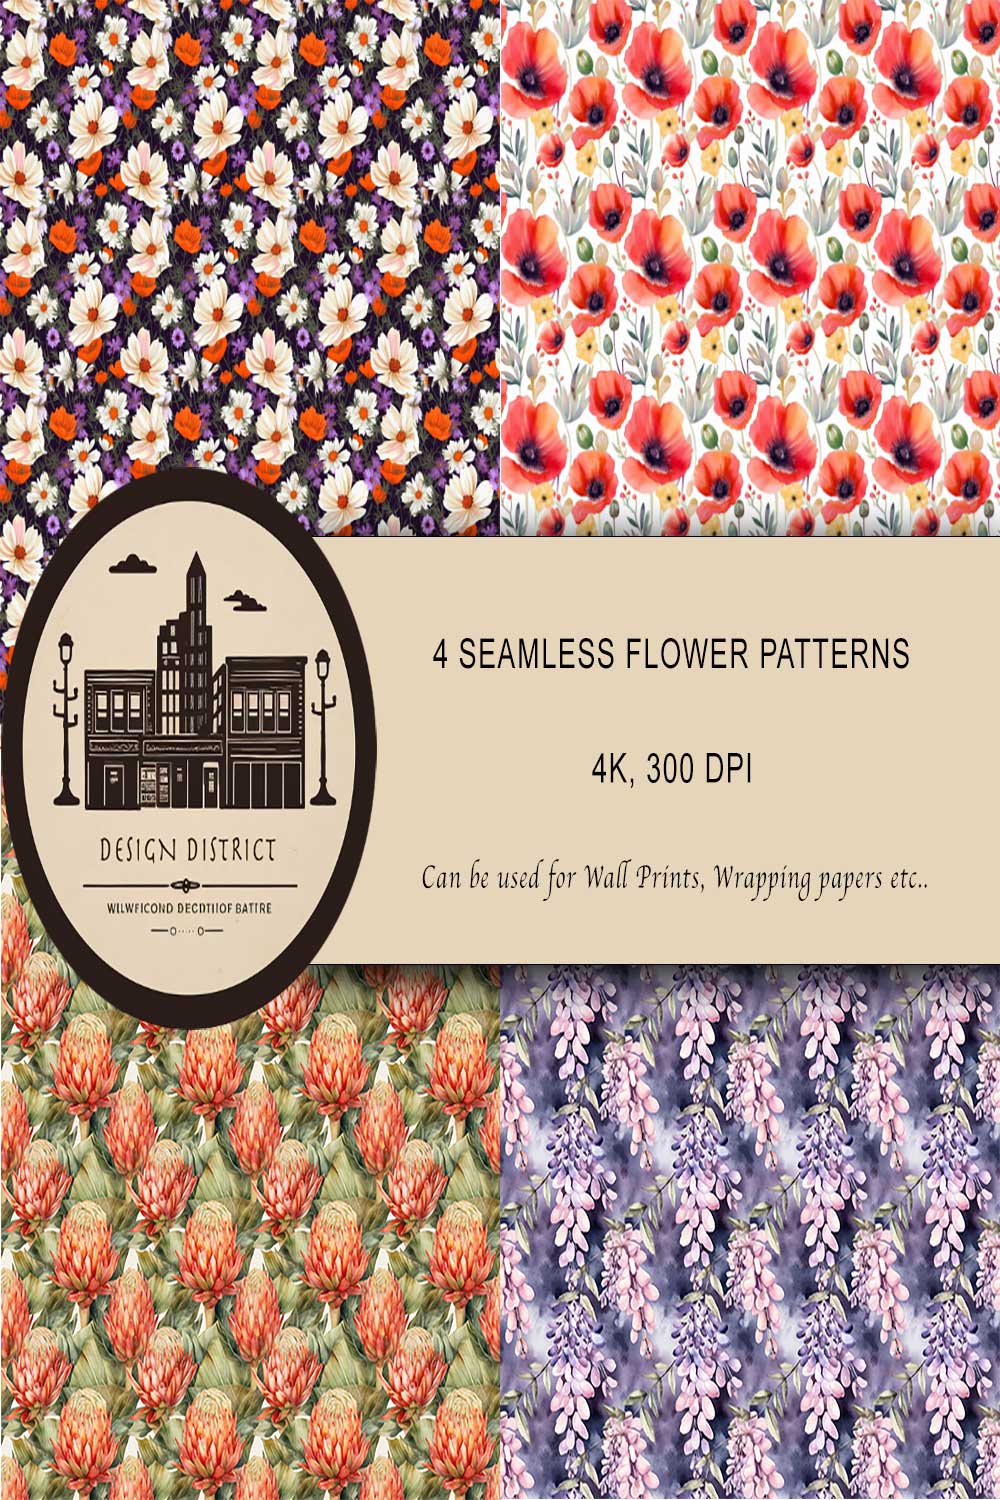 4 Seamless Flower/Floral/Botanical Patterns pinterest preview image.